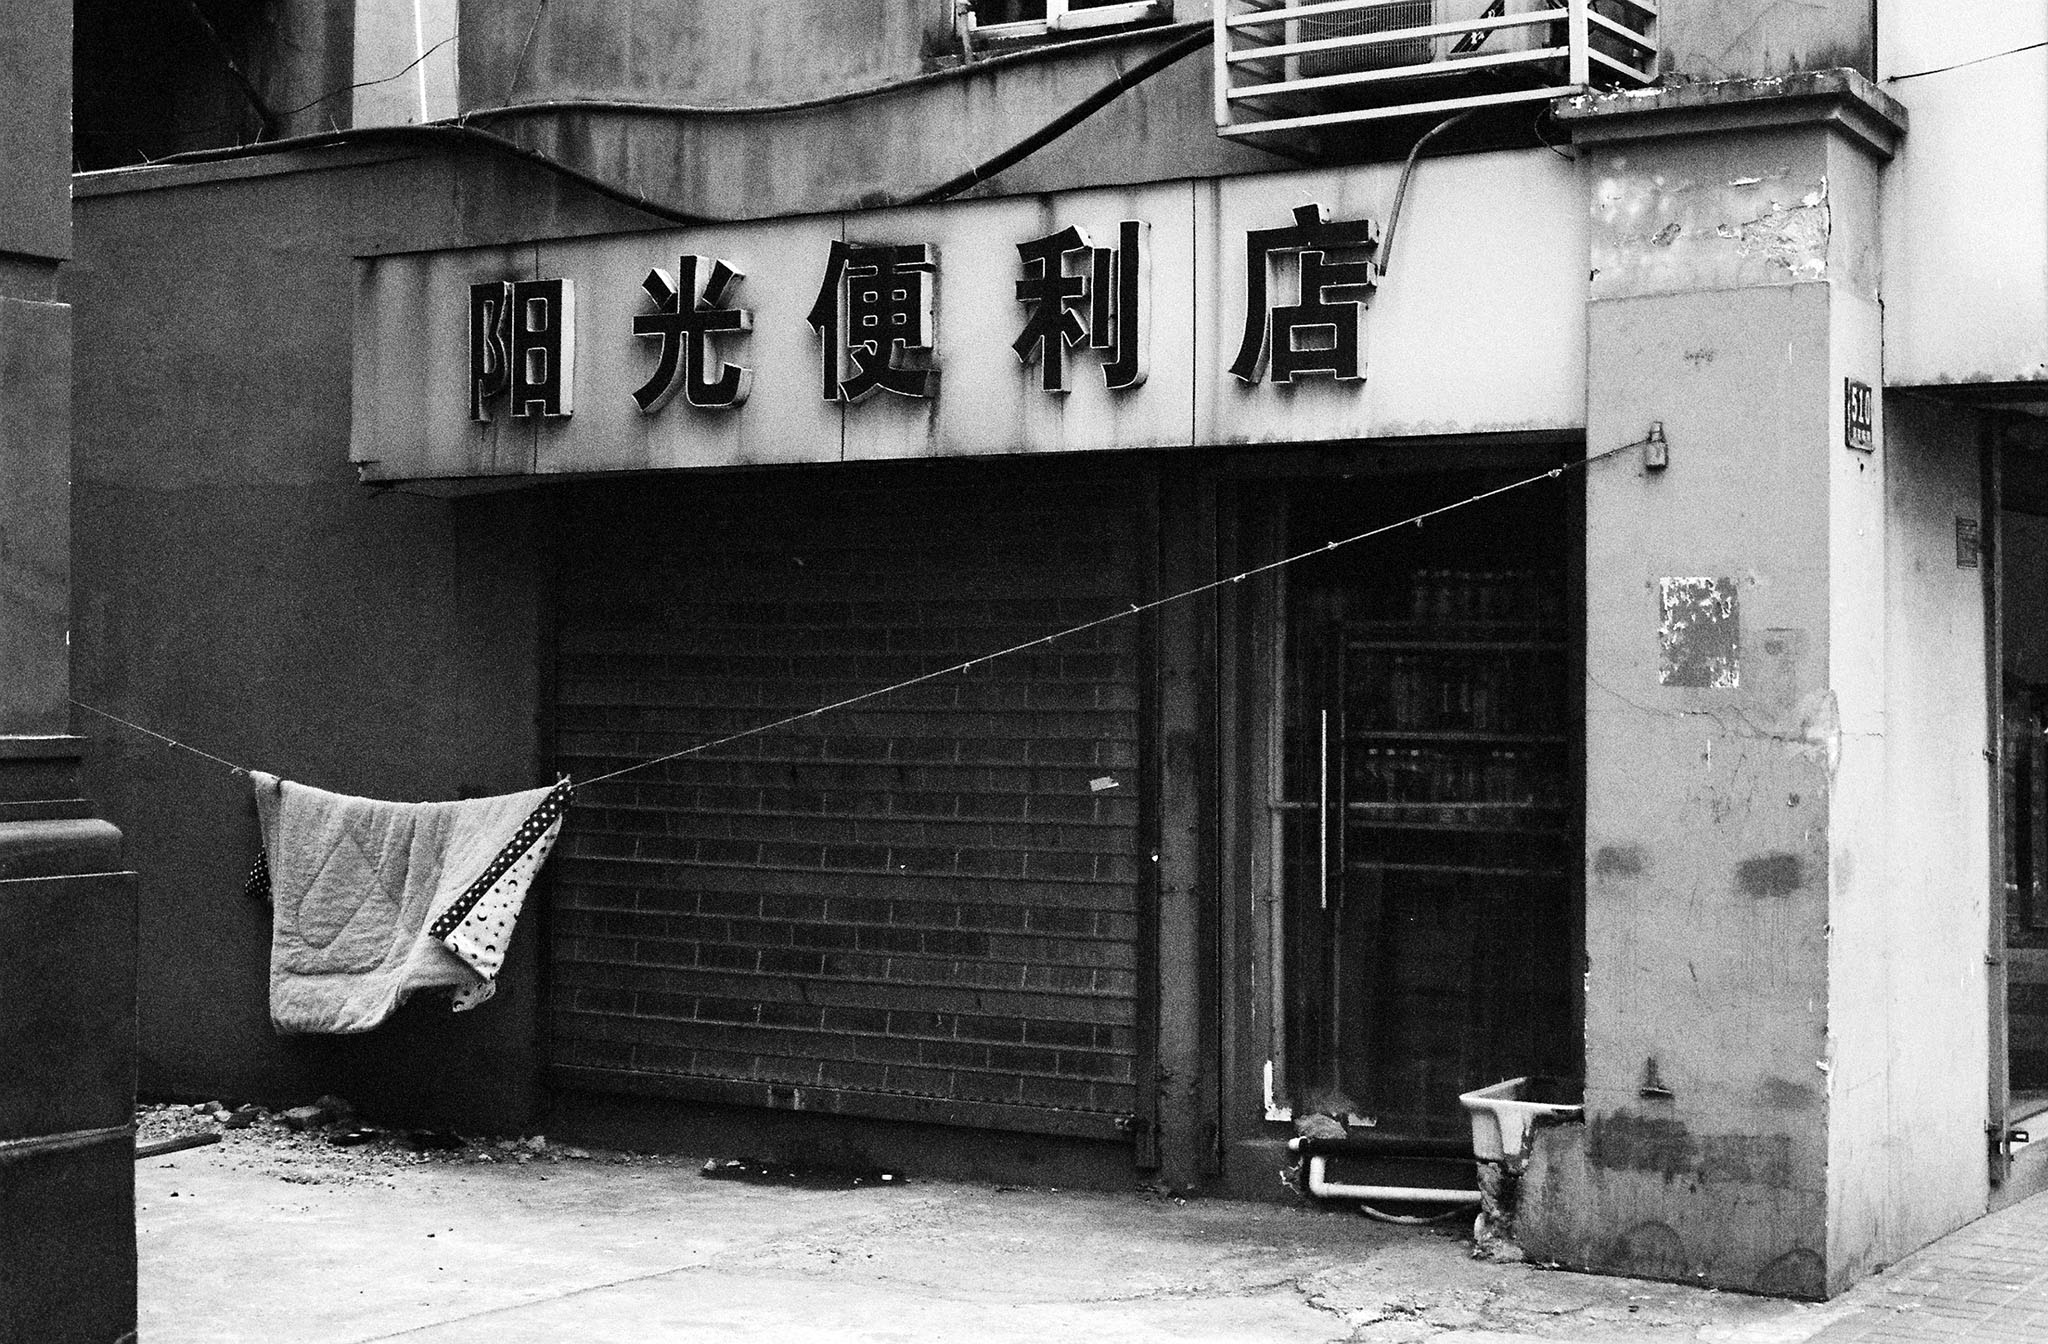 img/1804-china-shanghai-1933-work-nikonf/tat-tso-1804-china-shanghai-1933-work-nikonf-22.jpg